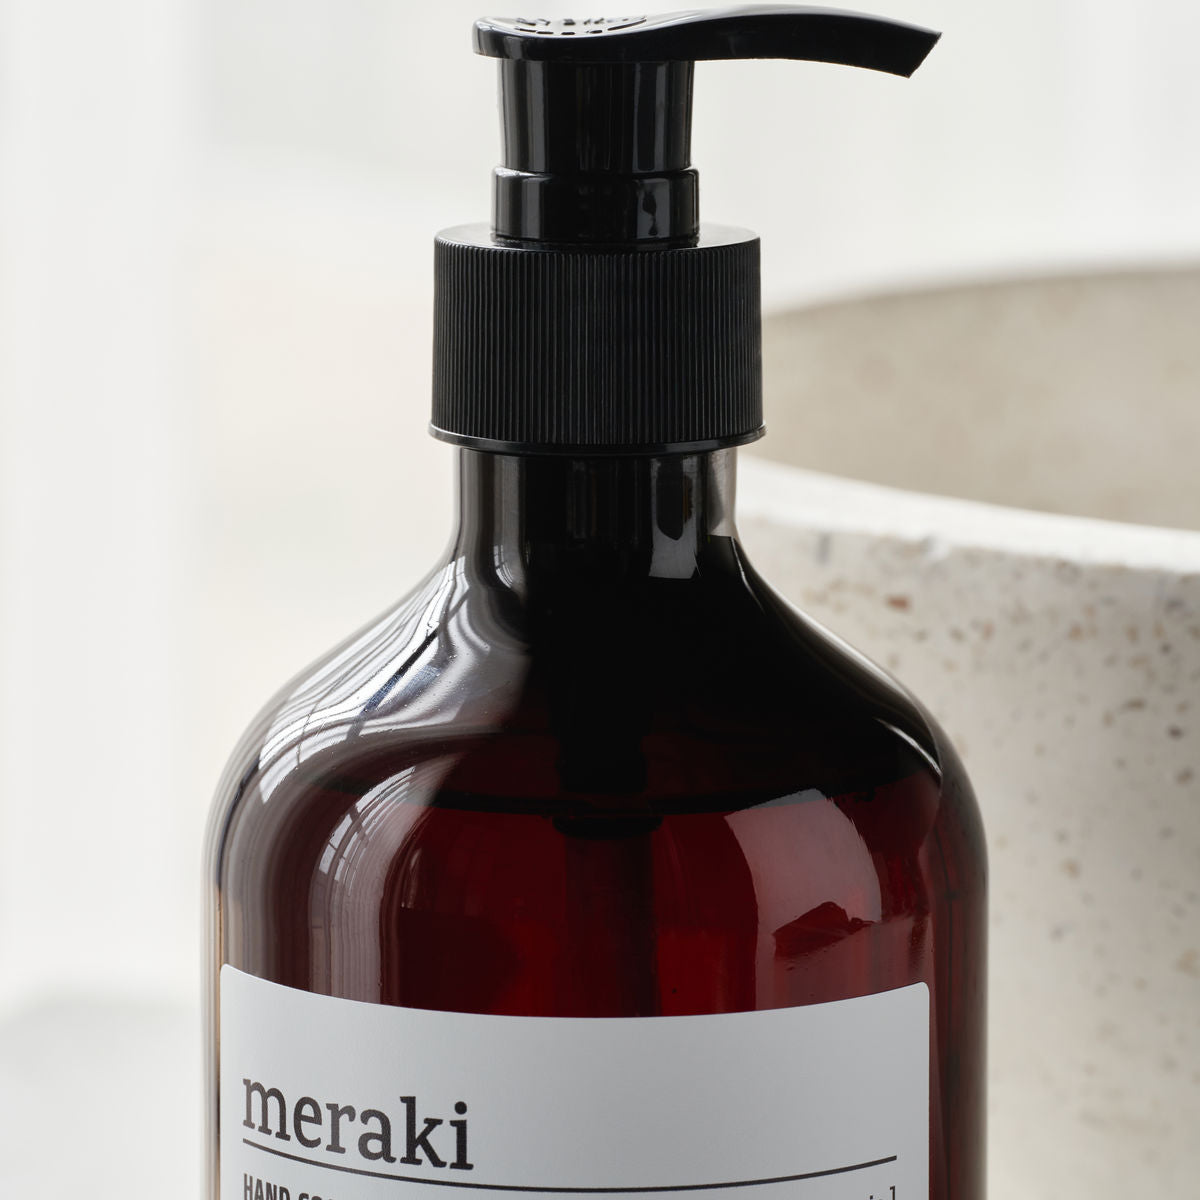 Meraki Soap à main, pur basique